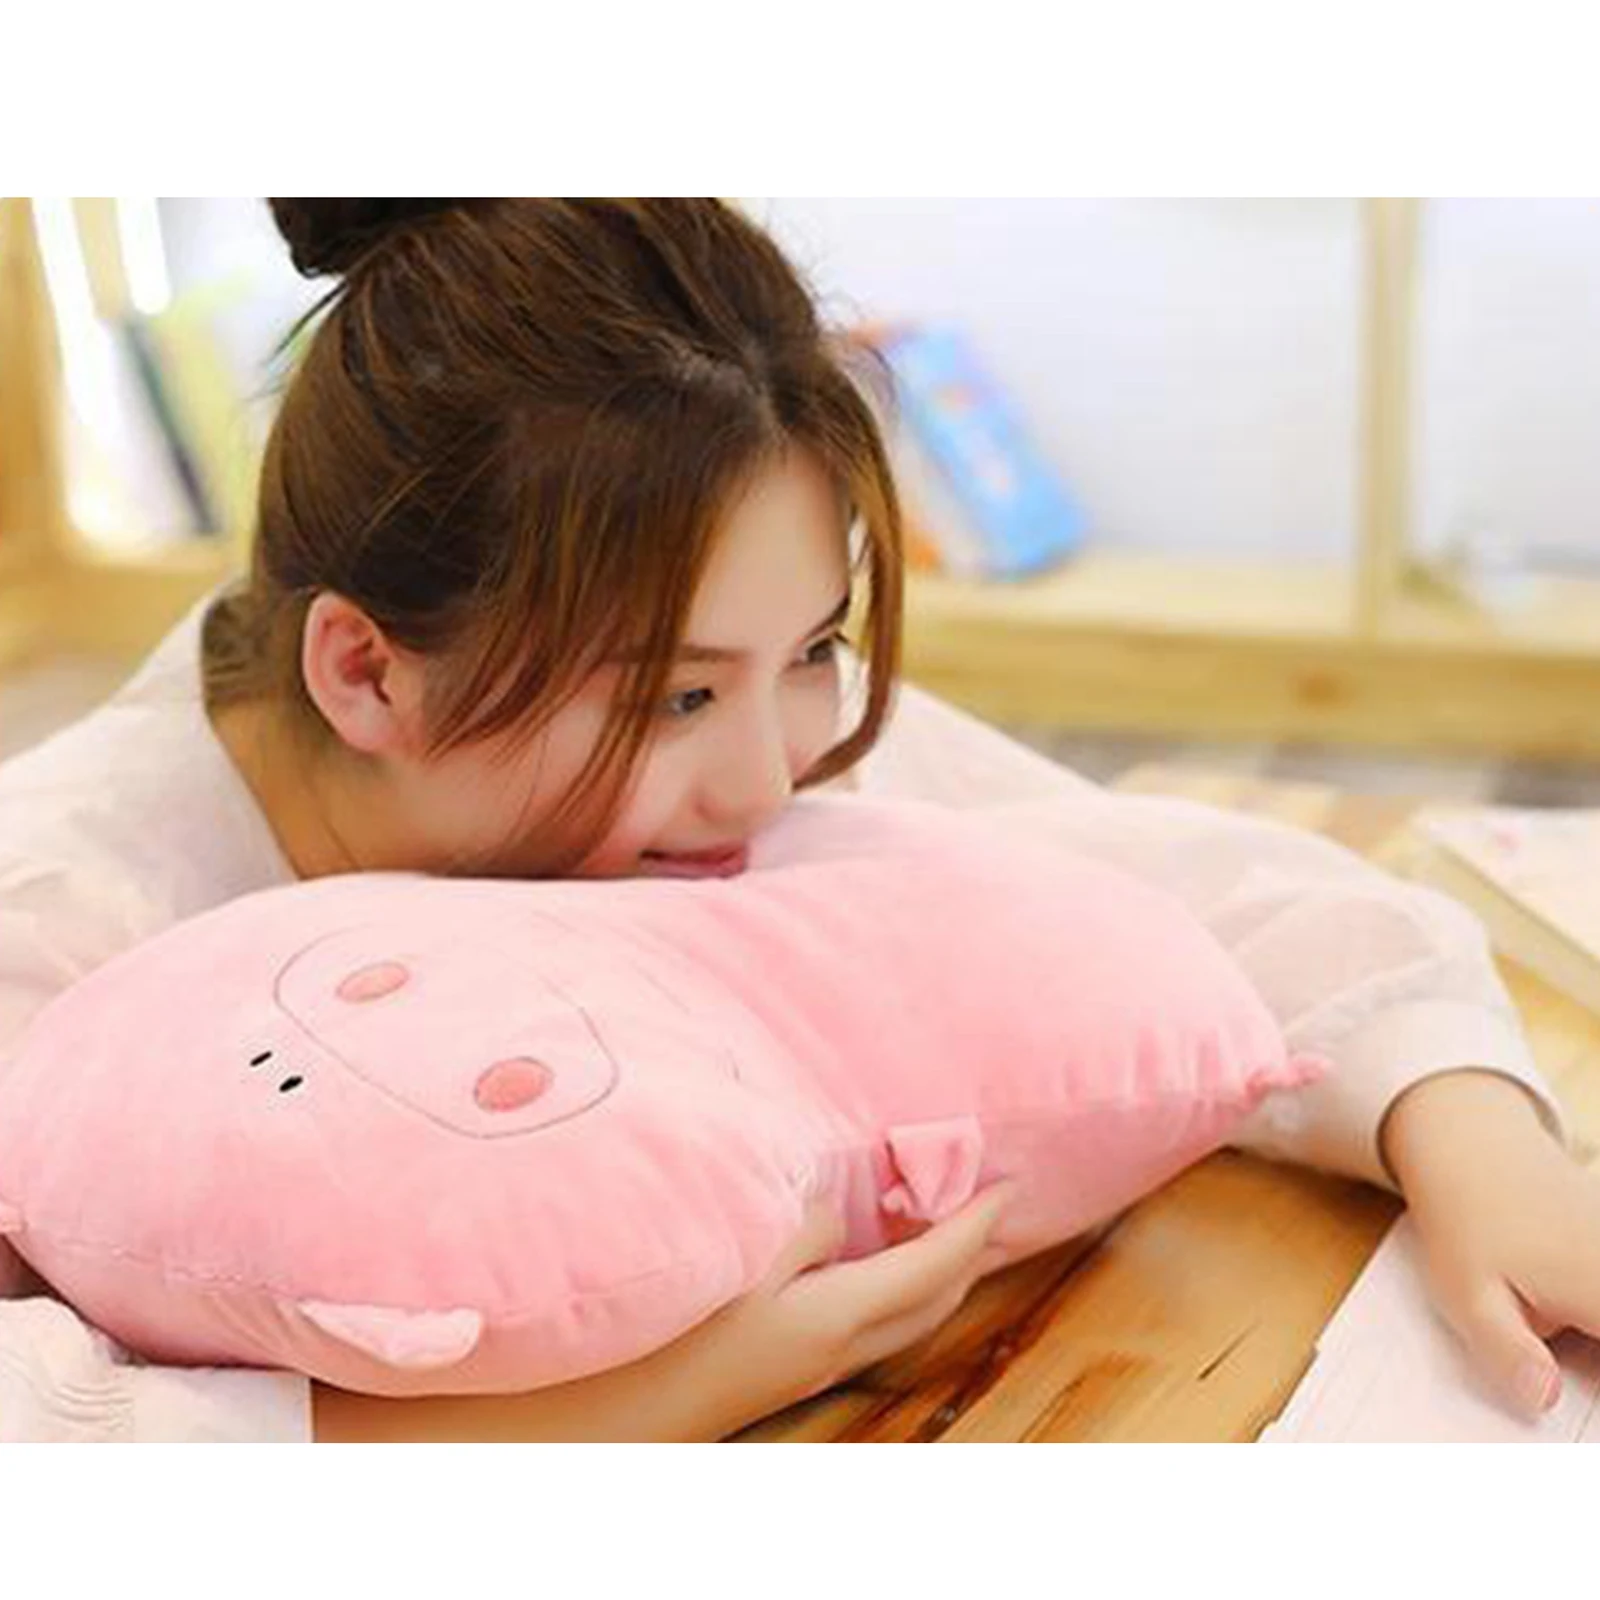 

Chubby Cartoon Pillow Soft Fat Hugging Pillow Stuffed Plush Animal Toy Cute